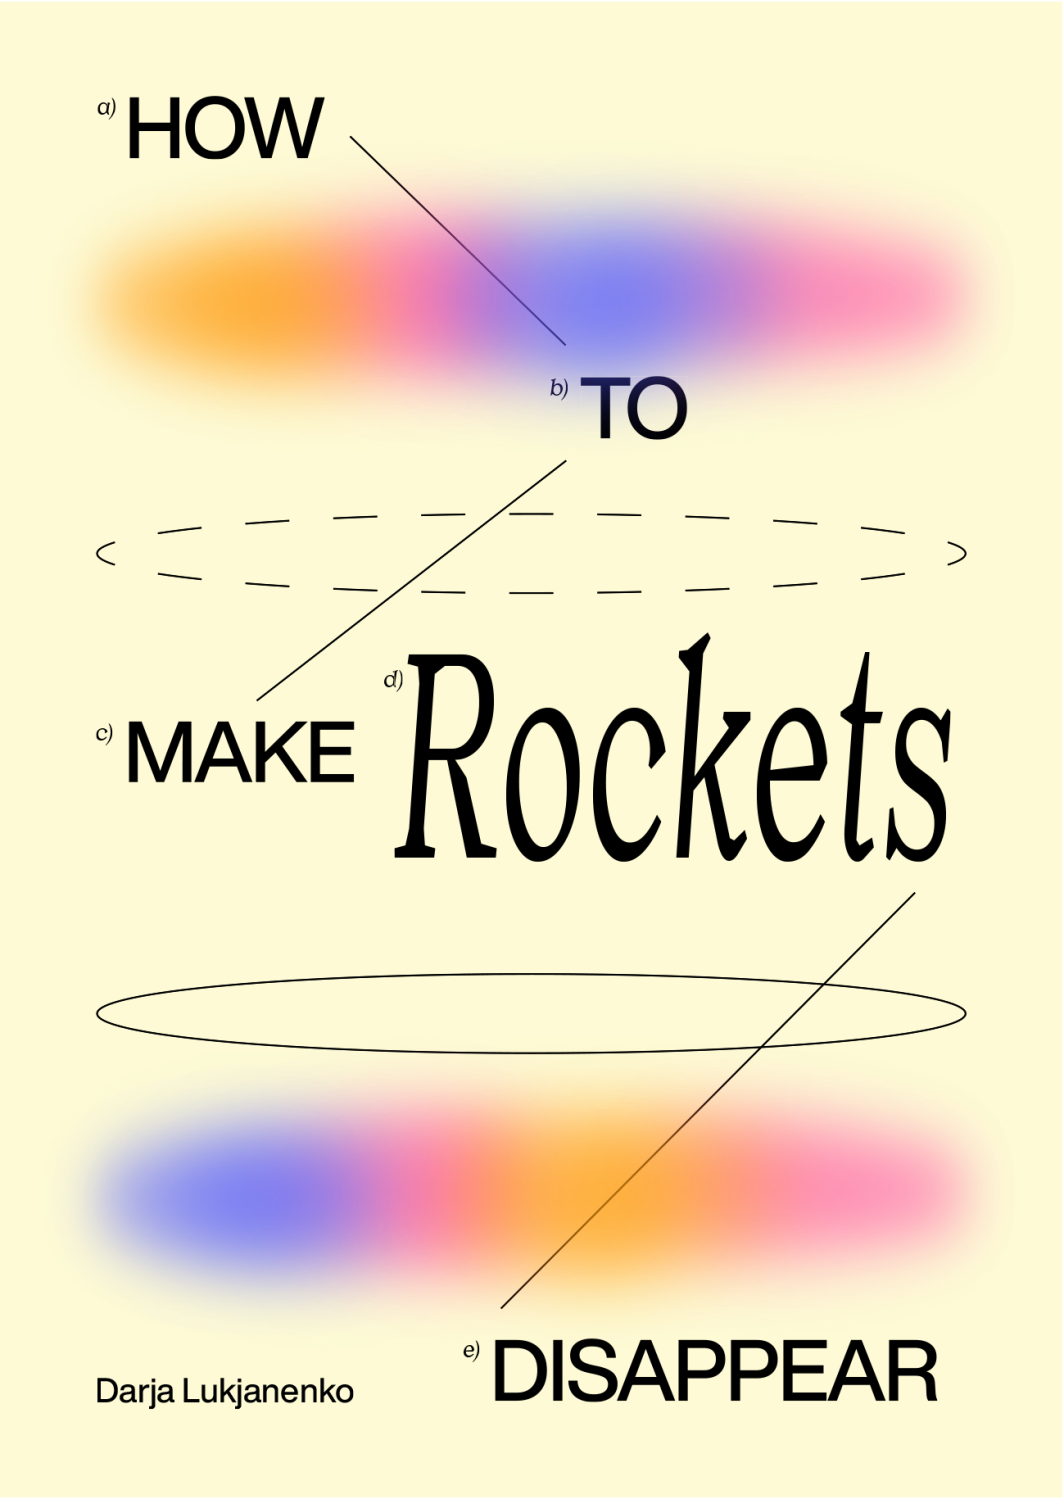 Darja Lukjanenko: How to make rockets disappear